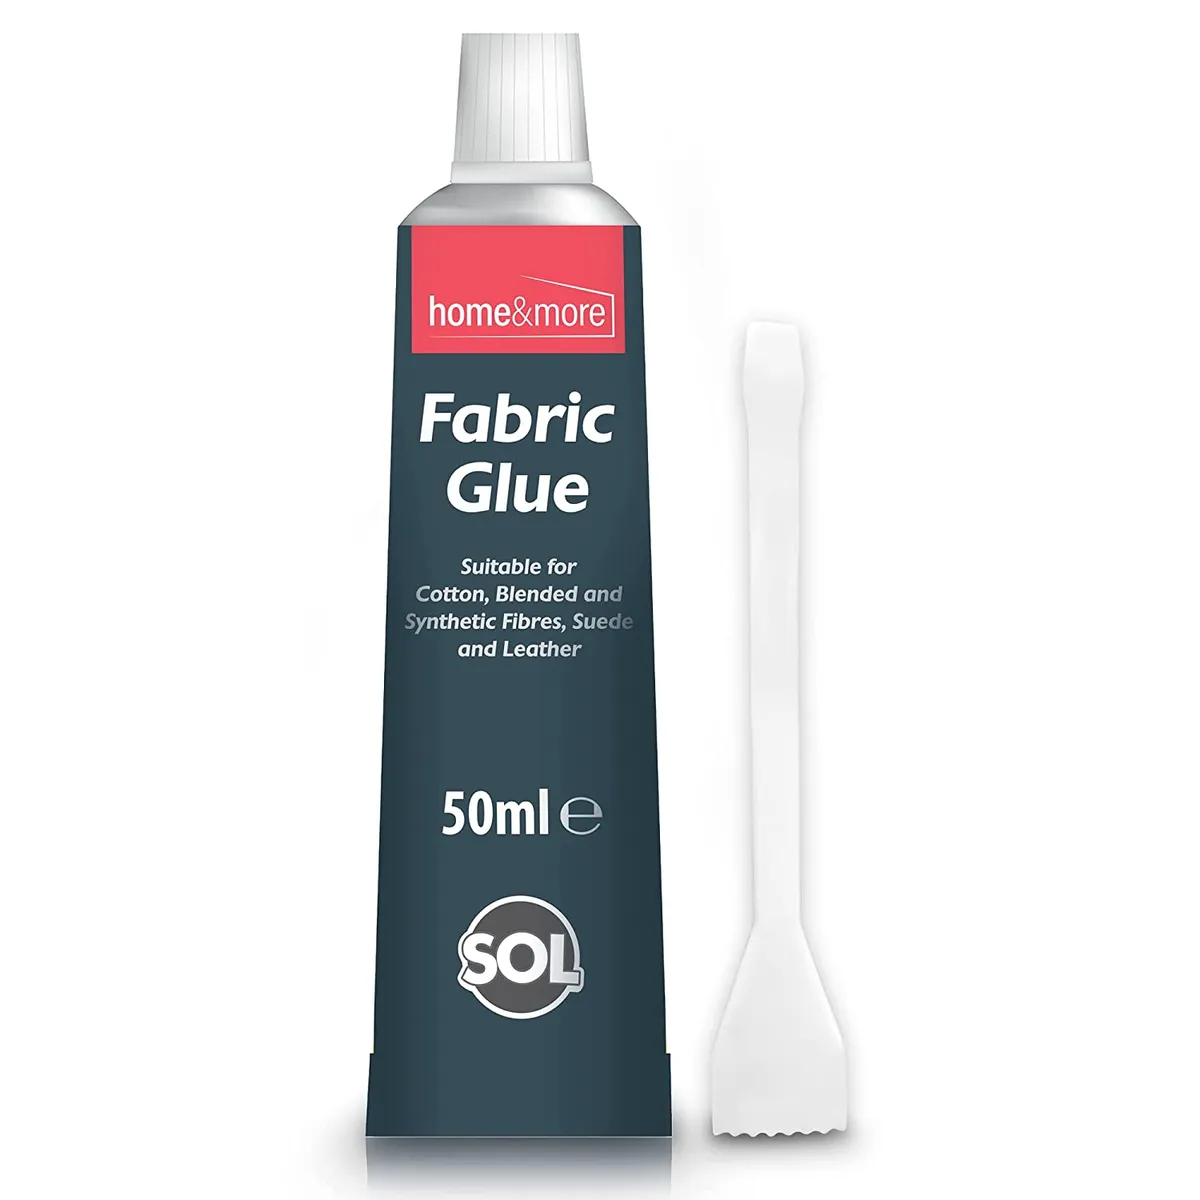 Fabric glue